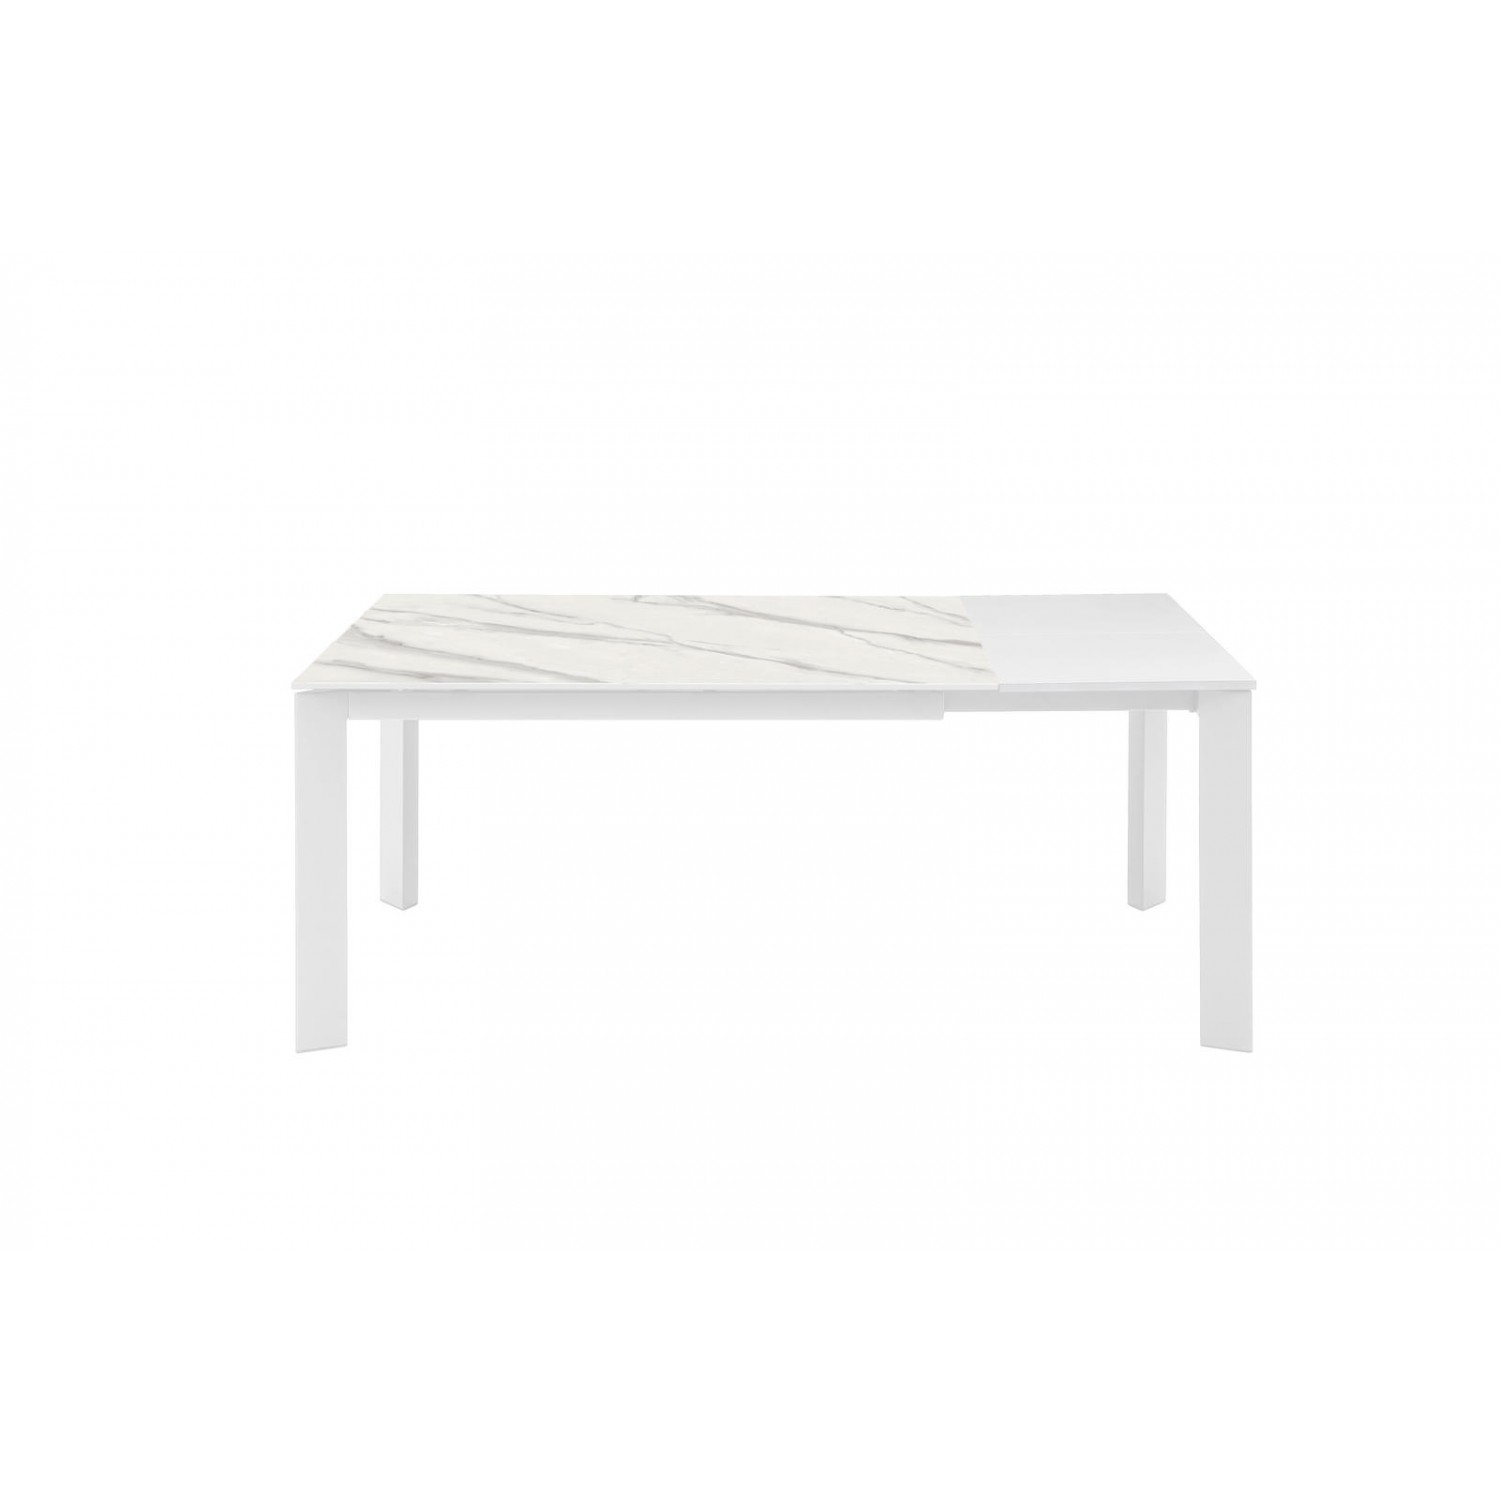 design twist tavolo allungabile (140/200 x 90 cm) david